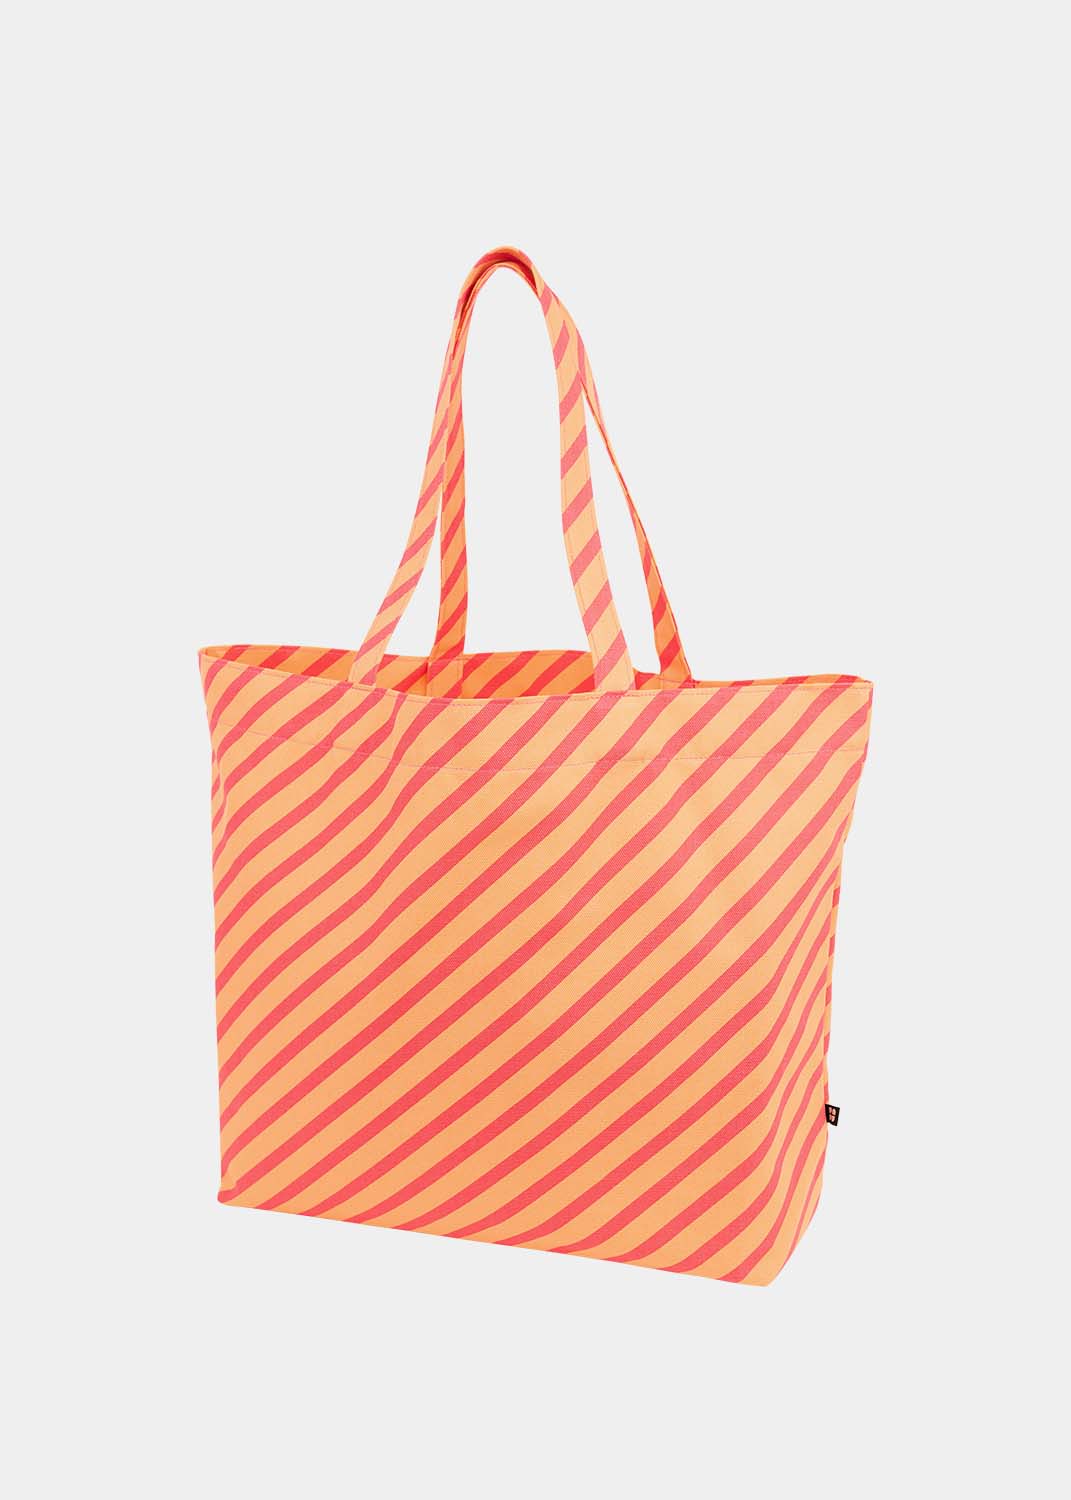 BEACH BAG, Diagonal Stripe, Cantaloupe/Red